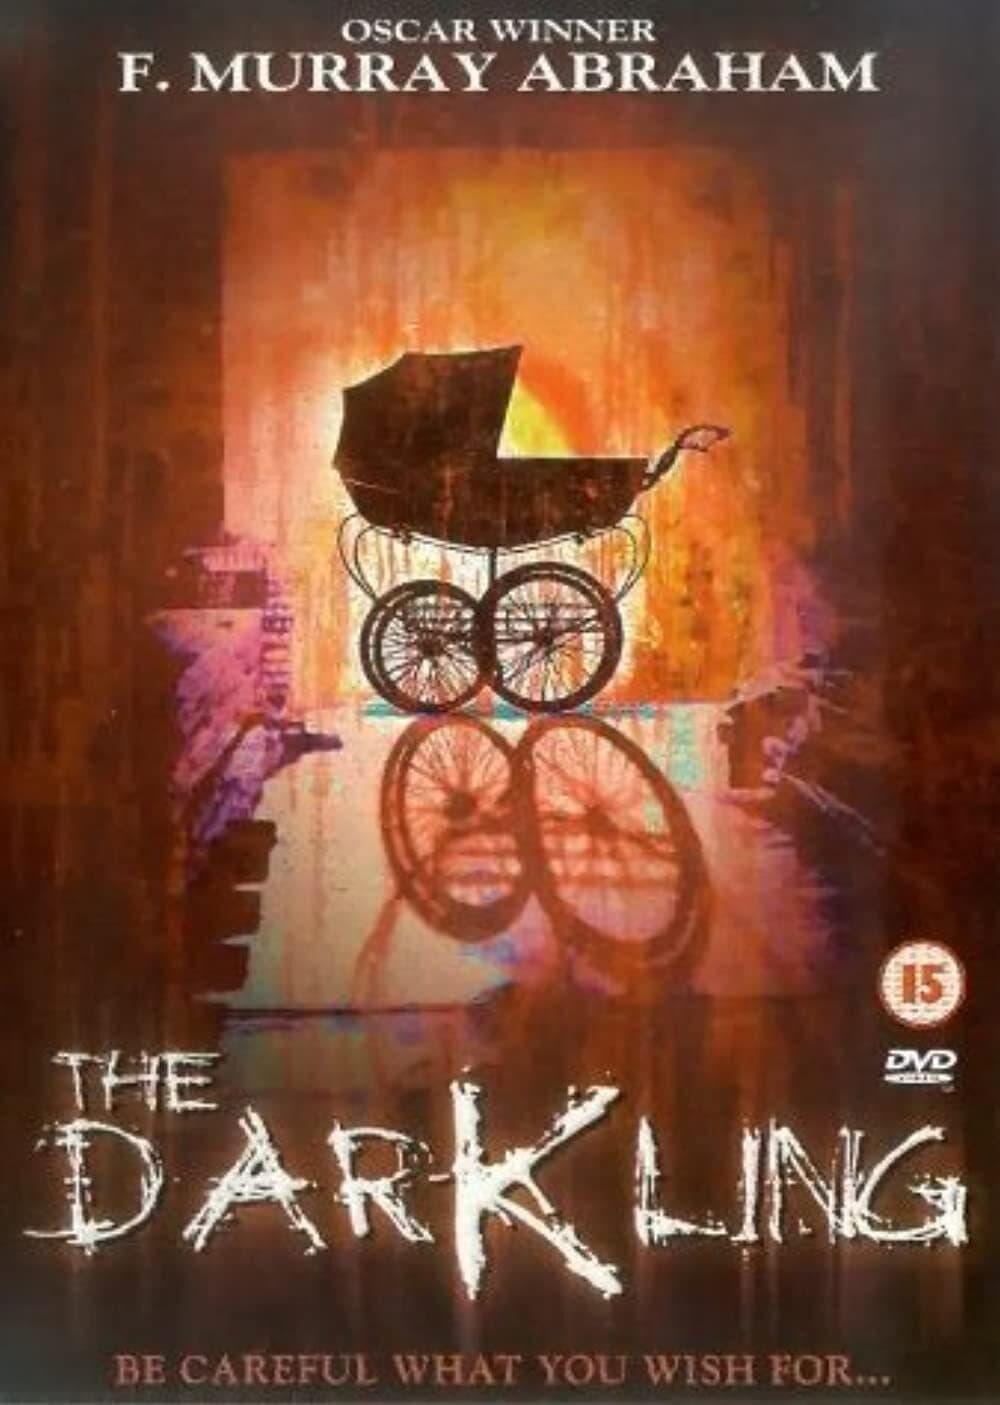 The Darkling poster